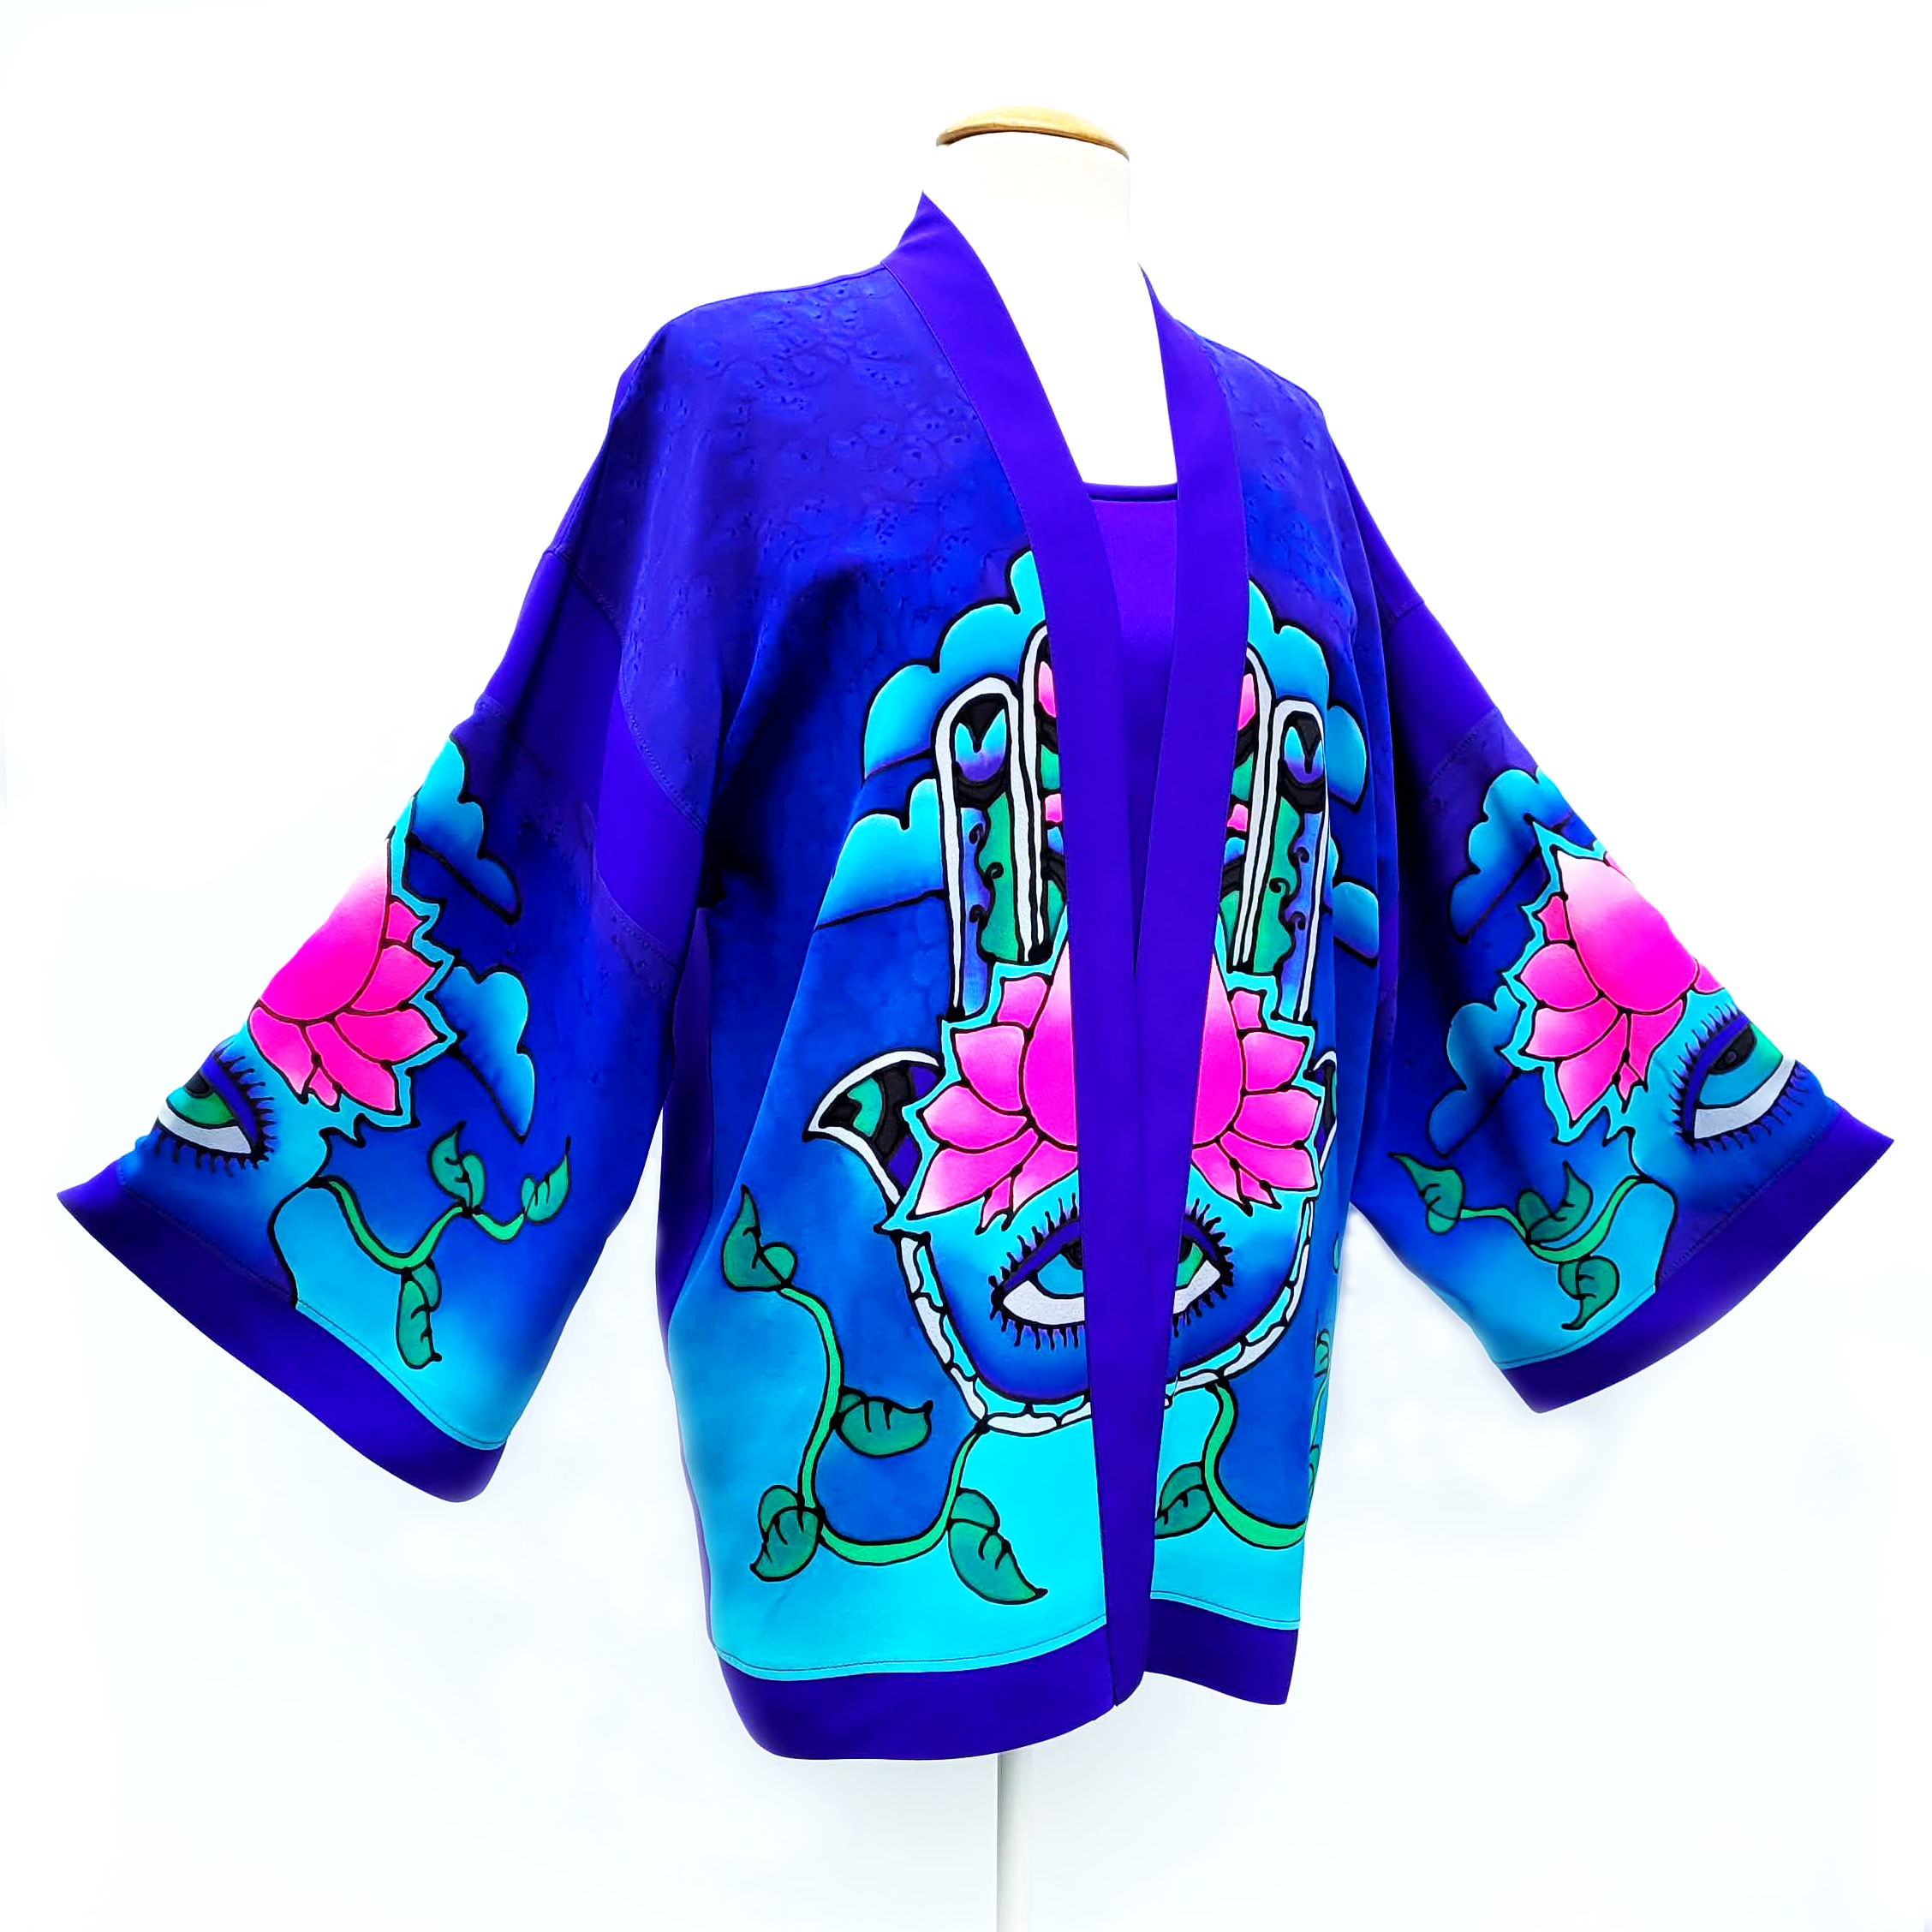 hand painted silk clothing for women purple Kimono jacket pink lotus flower design art made by Lynne Kiel